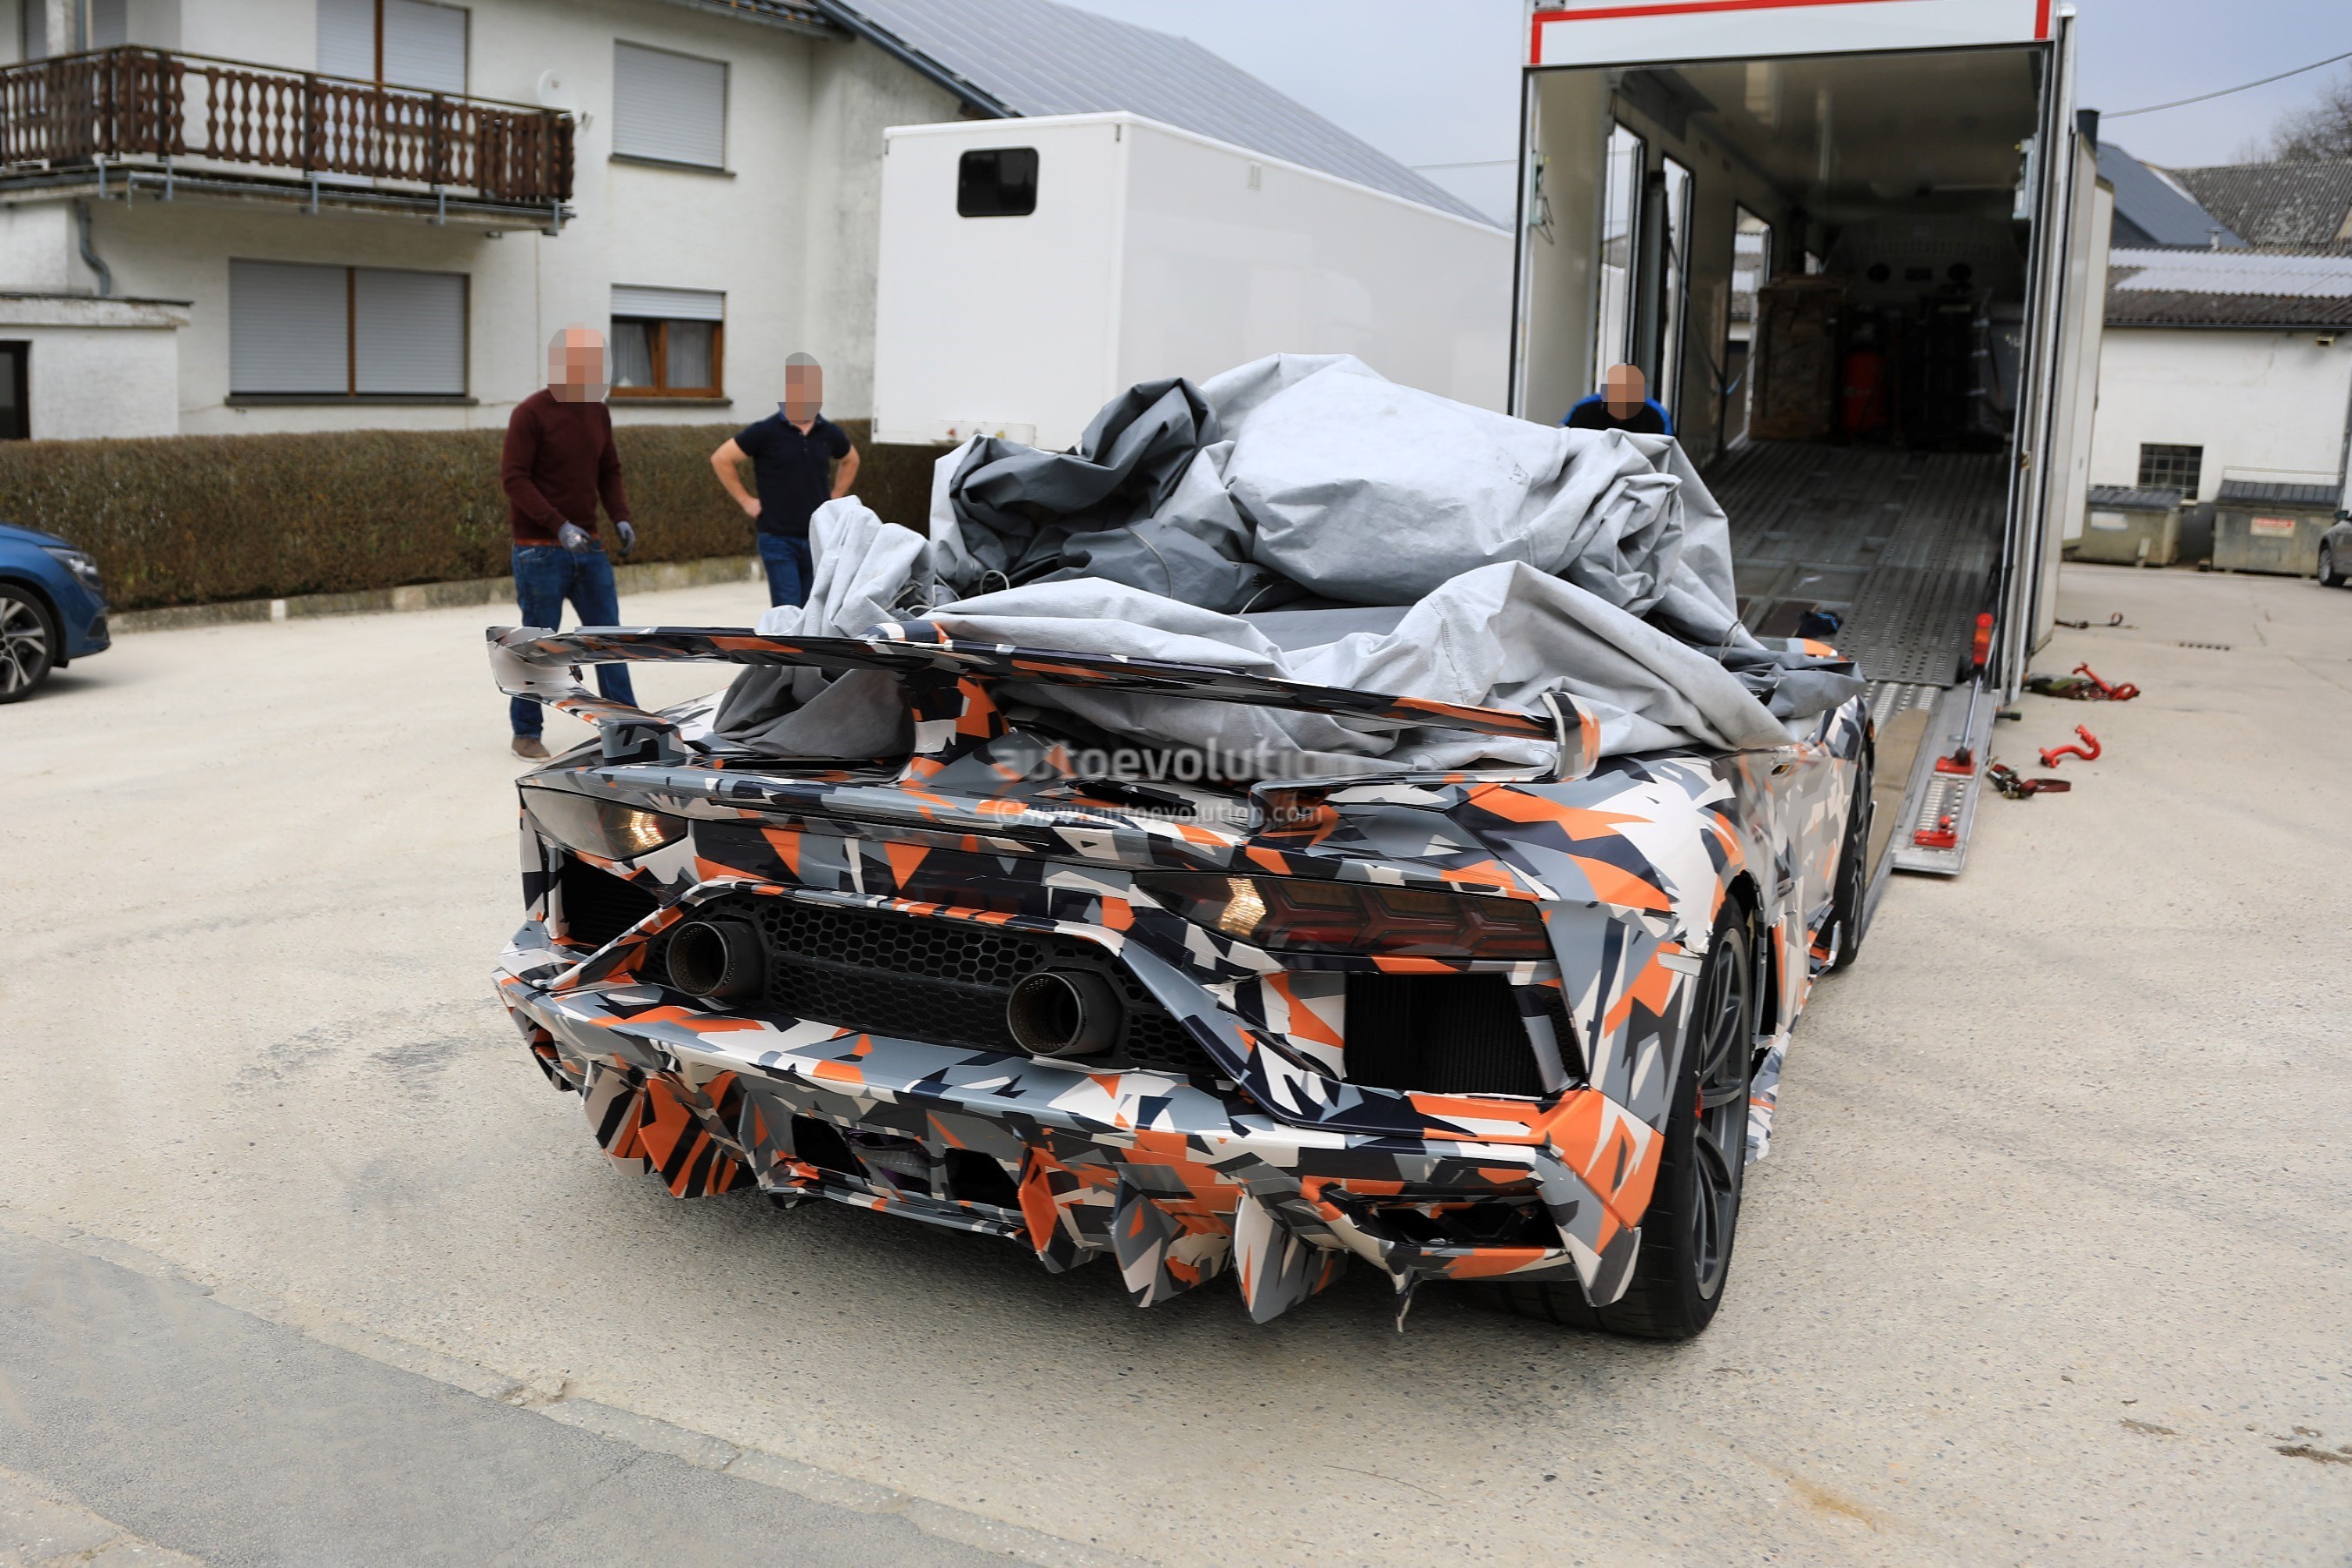 Lamborghini Recalls Aventador Over Transmission Issue Autoevolution